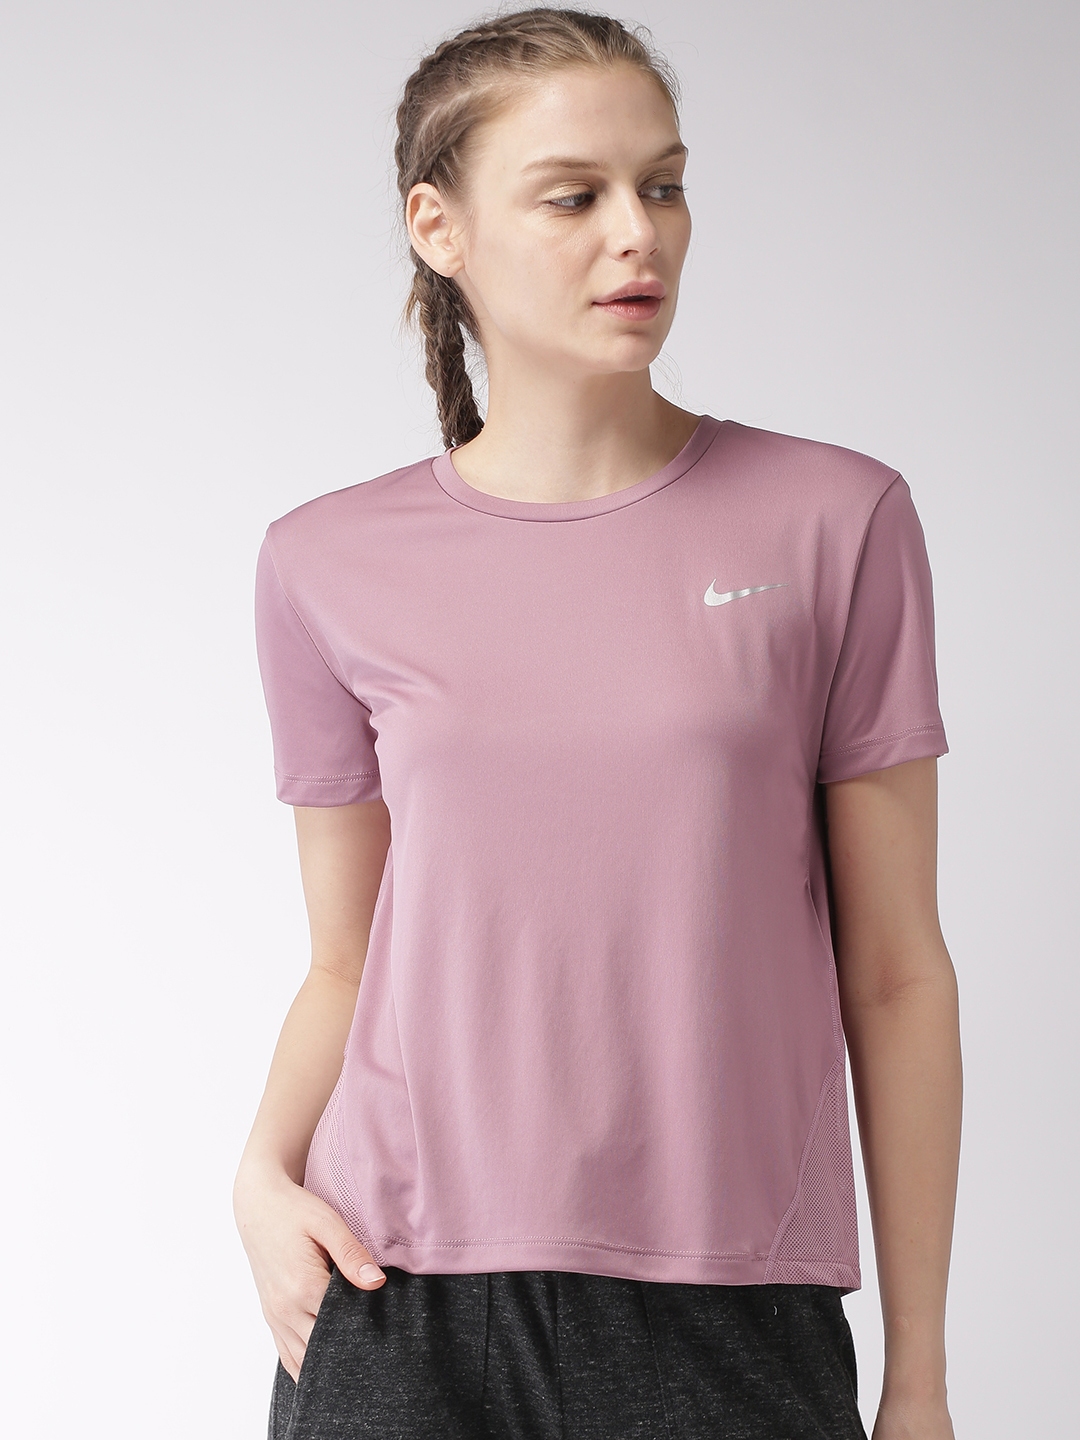 Buy Nike Women Pink Solid Standard Fit MILER DRI FIT Running T Shirt ...